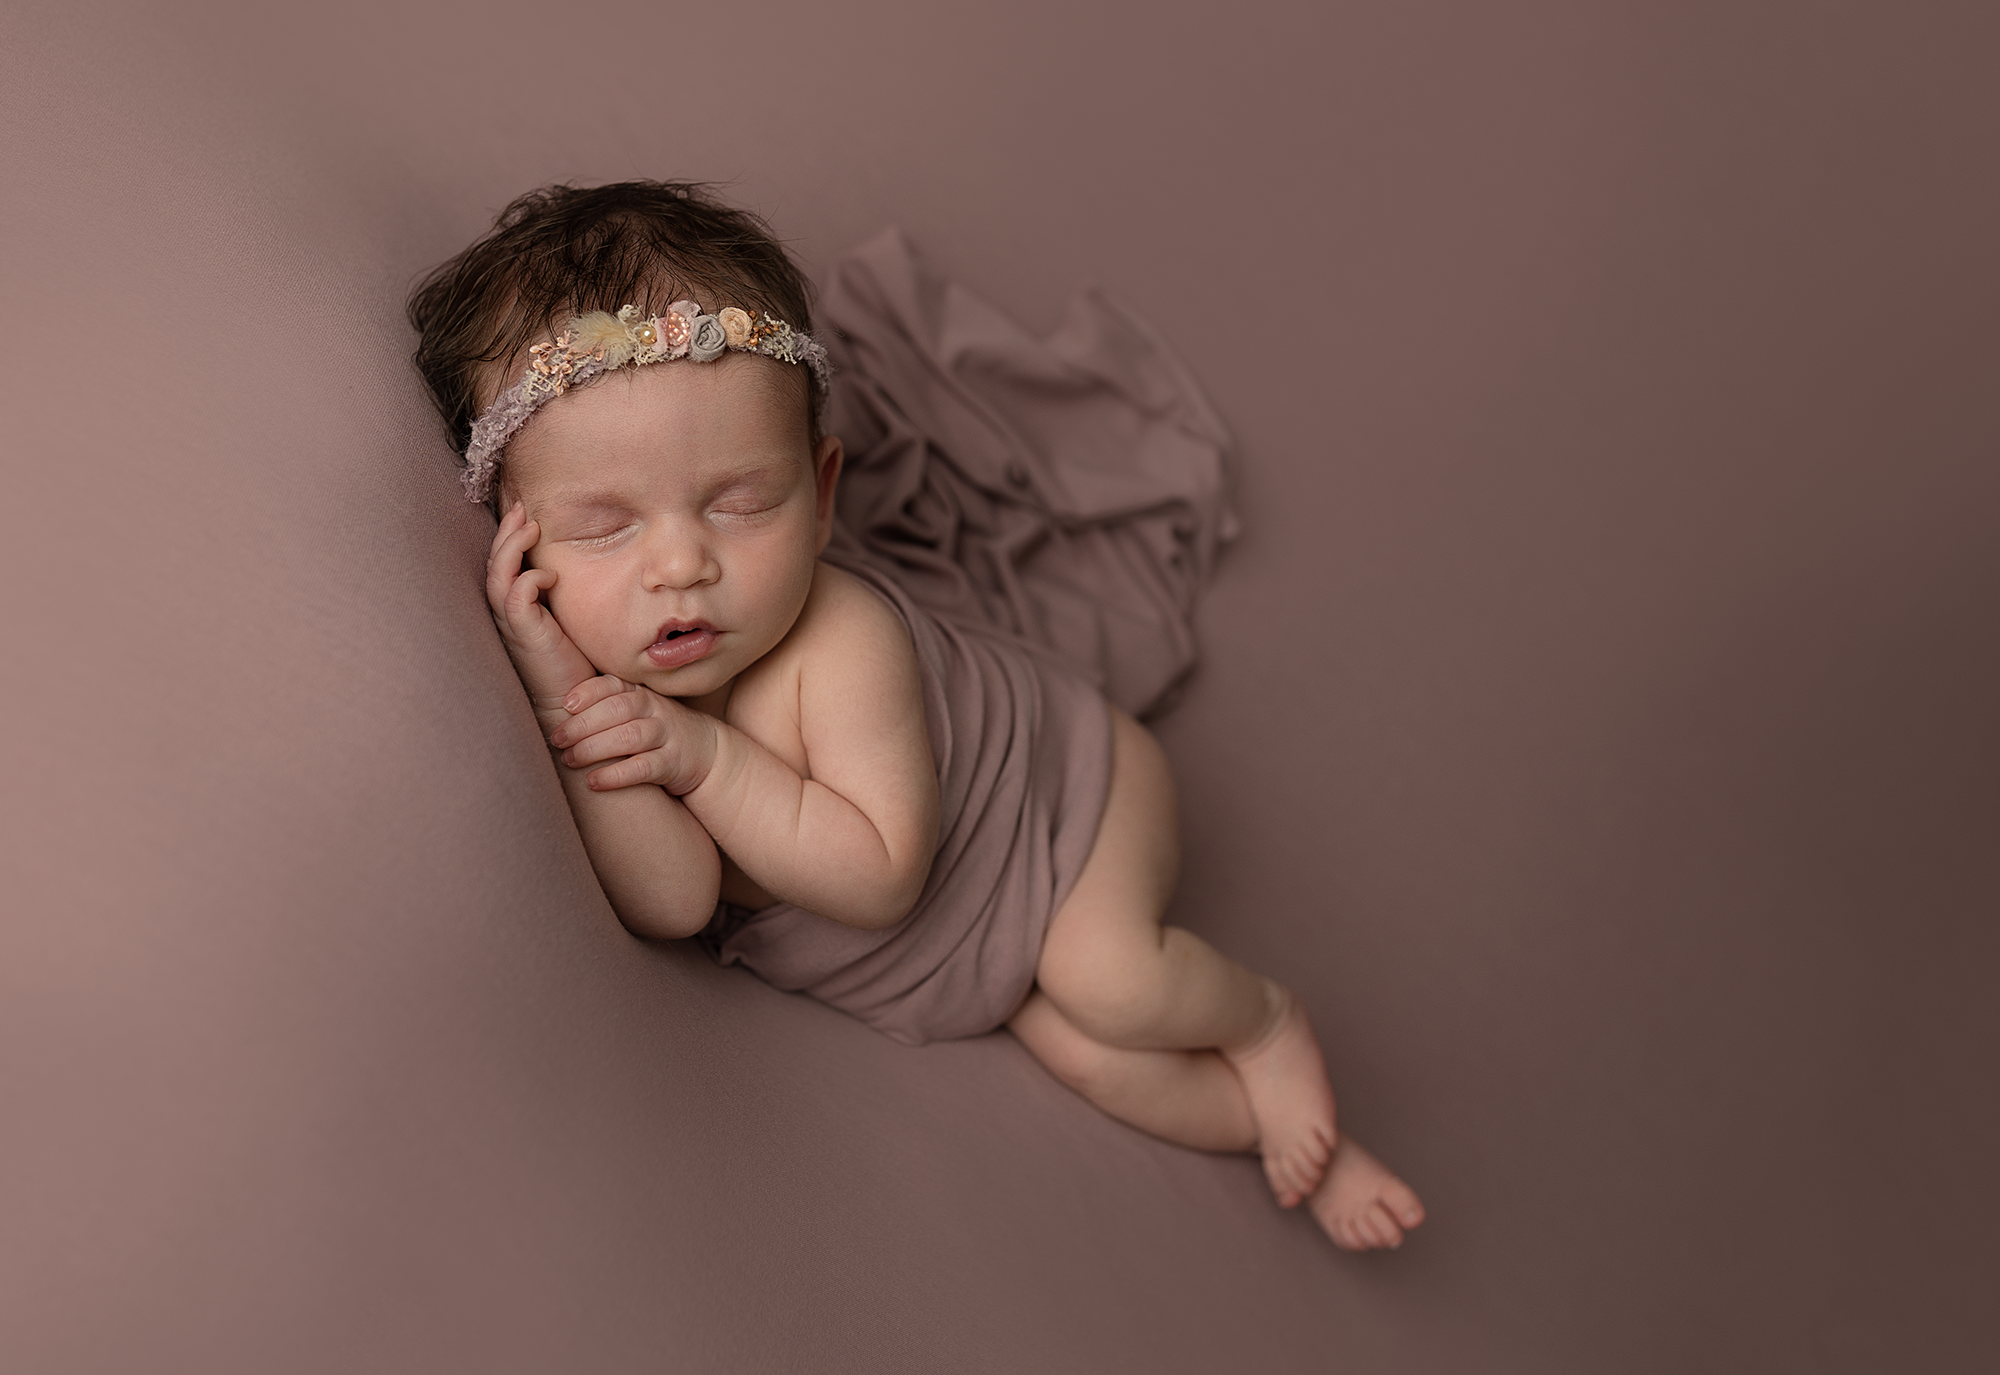 Photoshoot Of A Cute Sleeping Baby